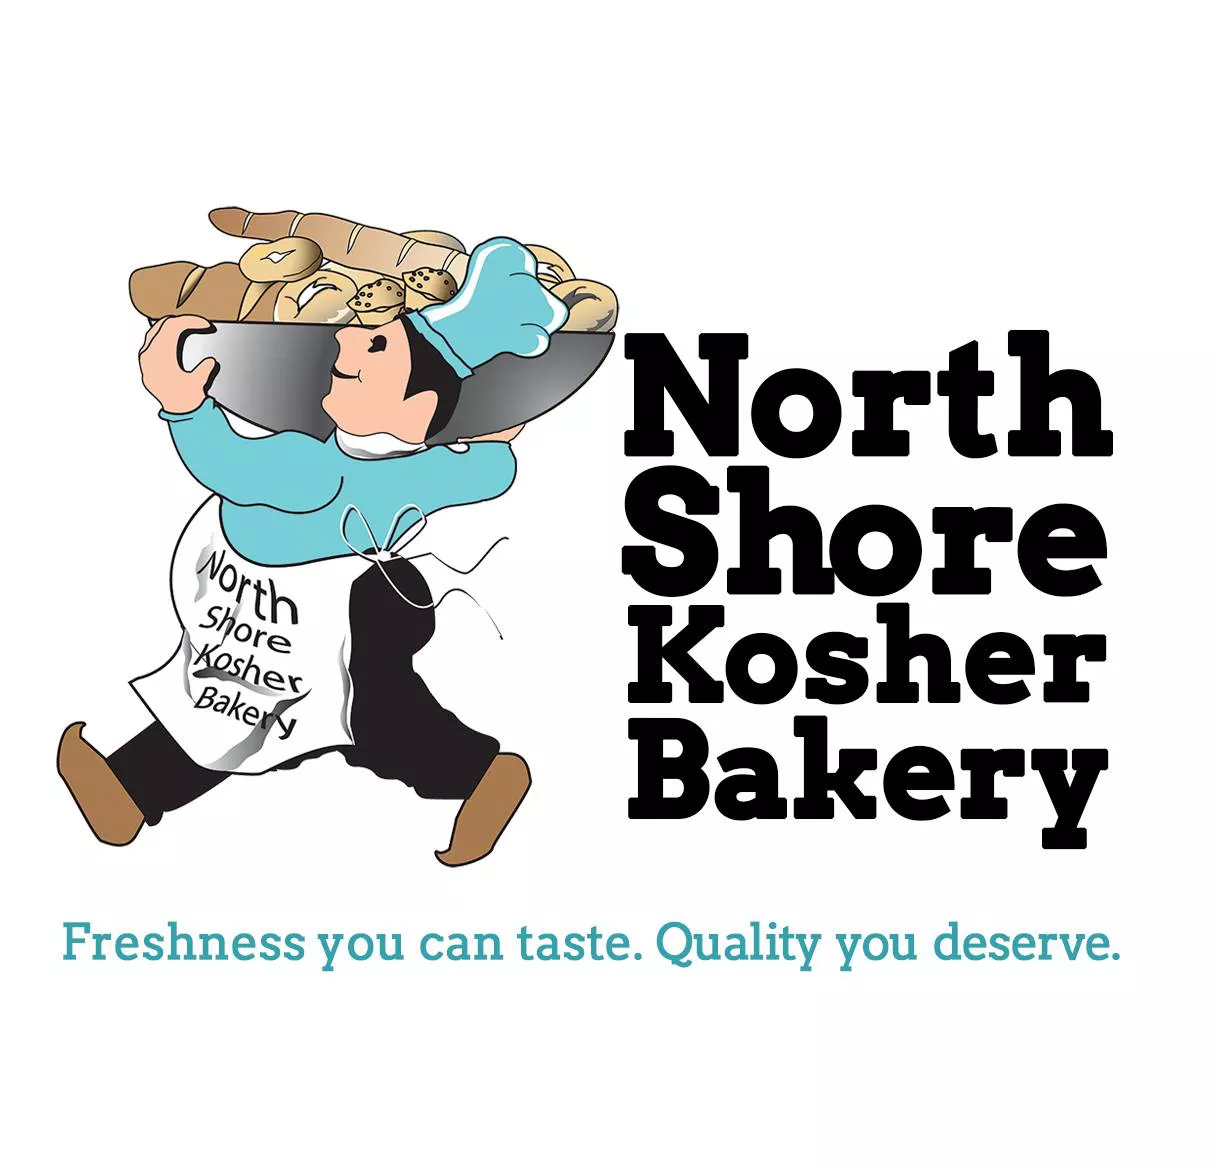 North Shore Kosher Bakery Chicago